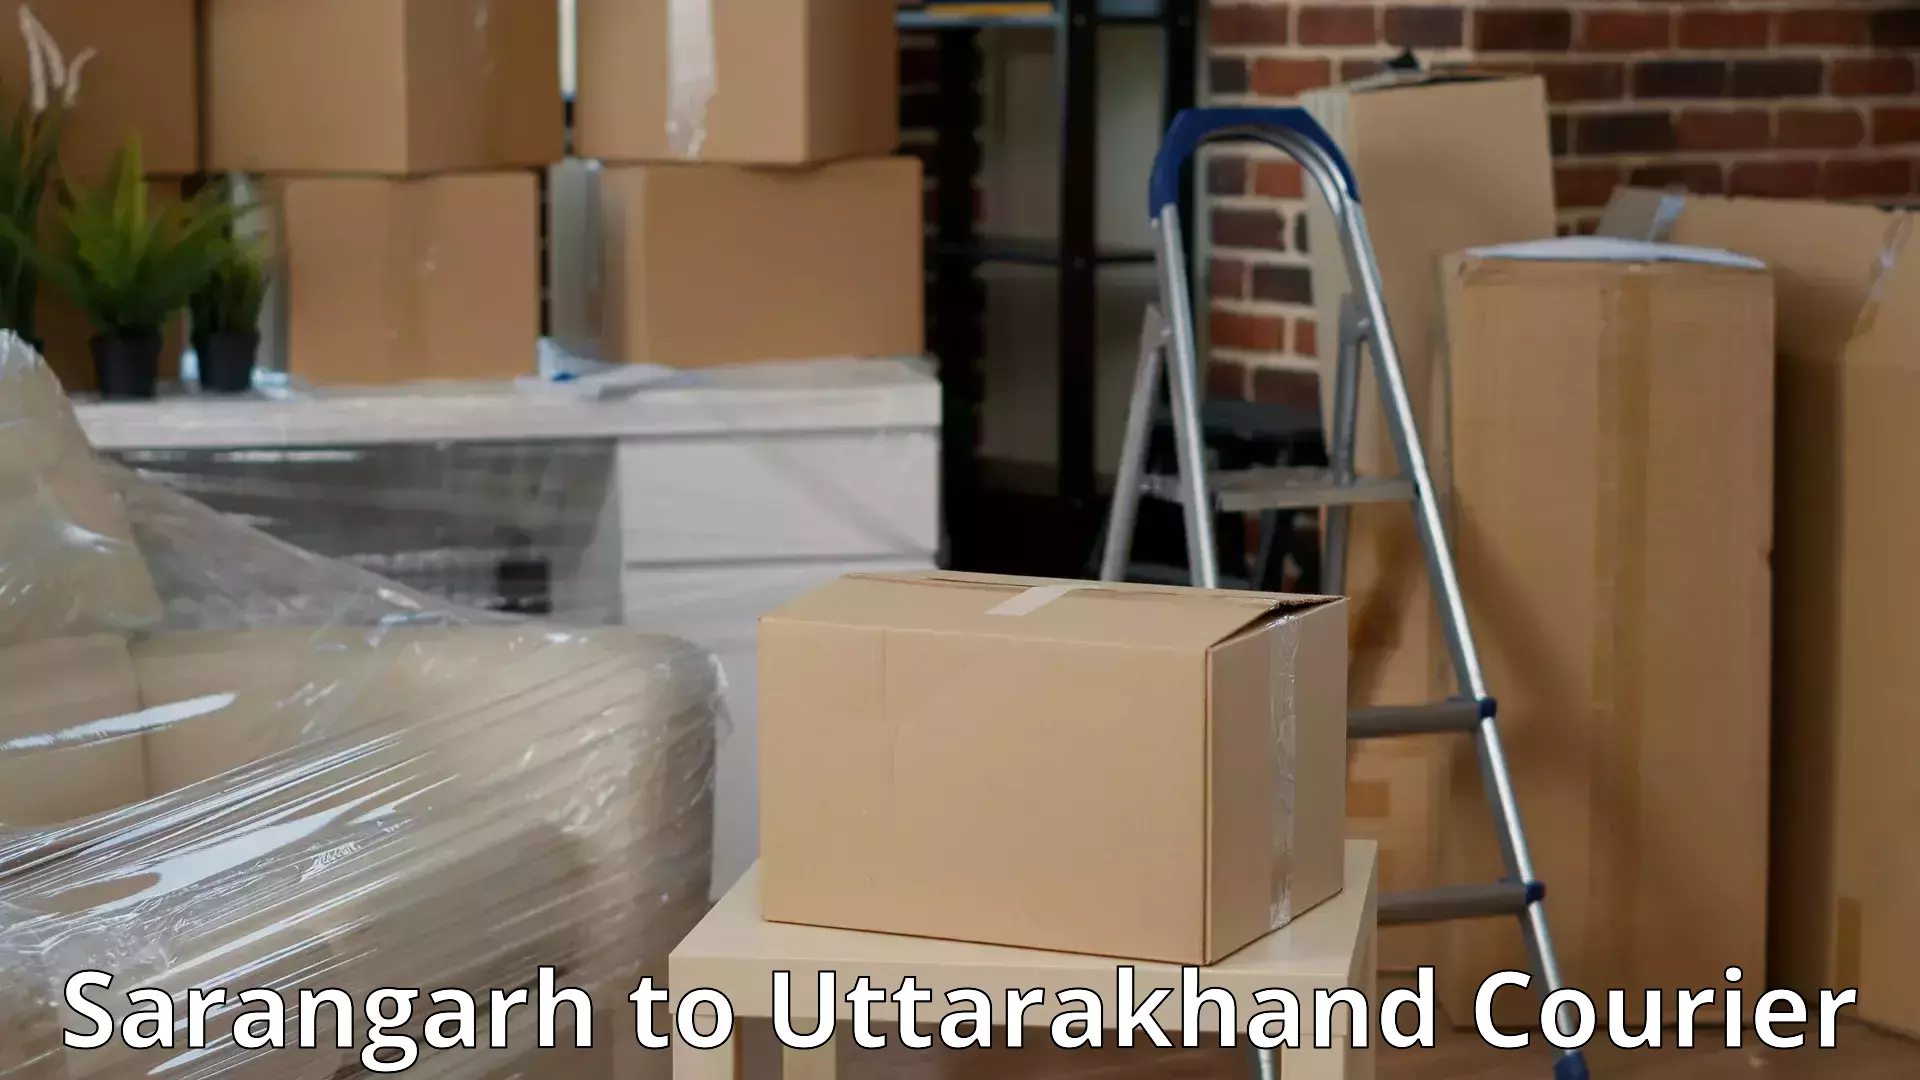 Full-service household moving in Sarangarh to Haridwar